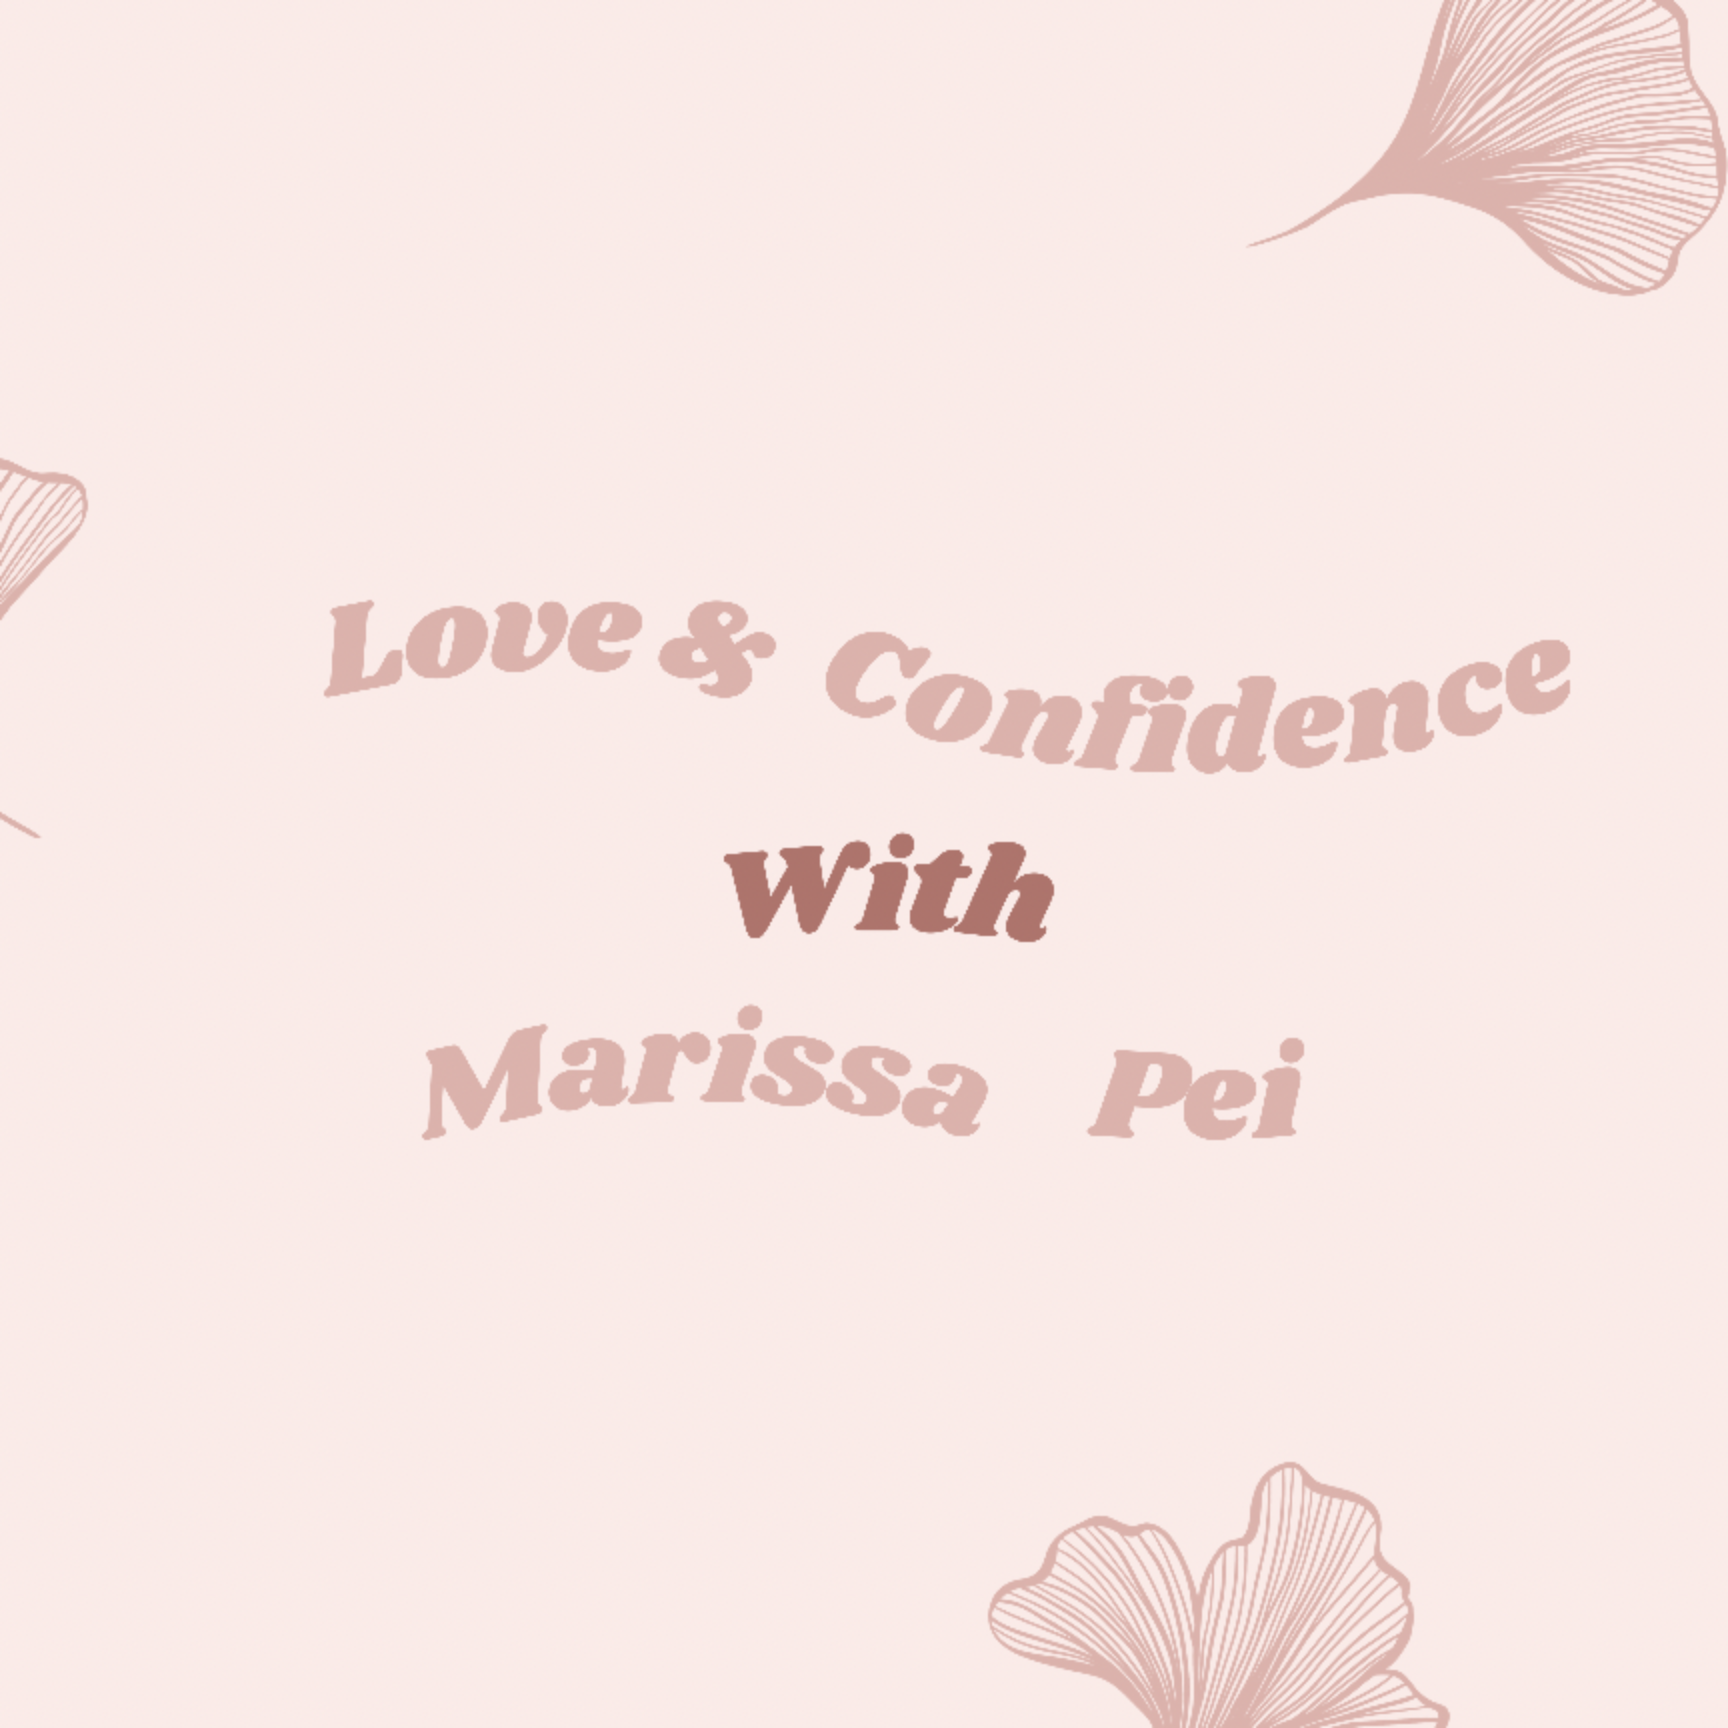 92 - Love with Marissa Pei Image